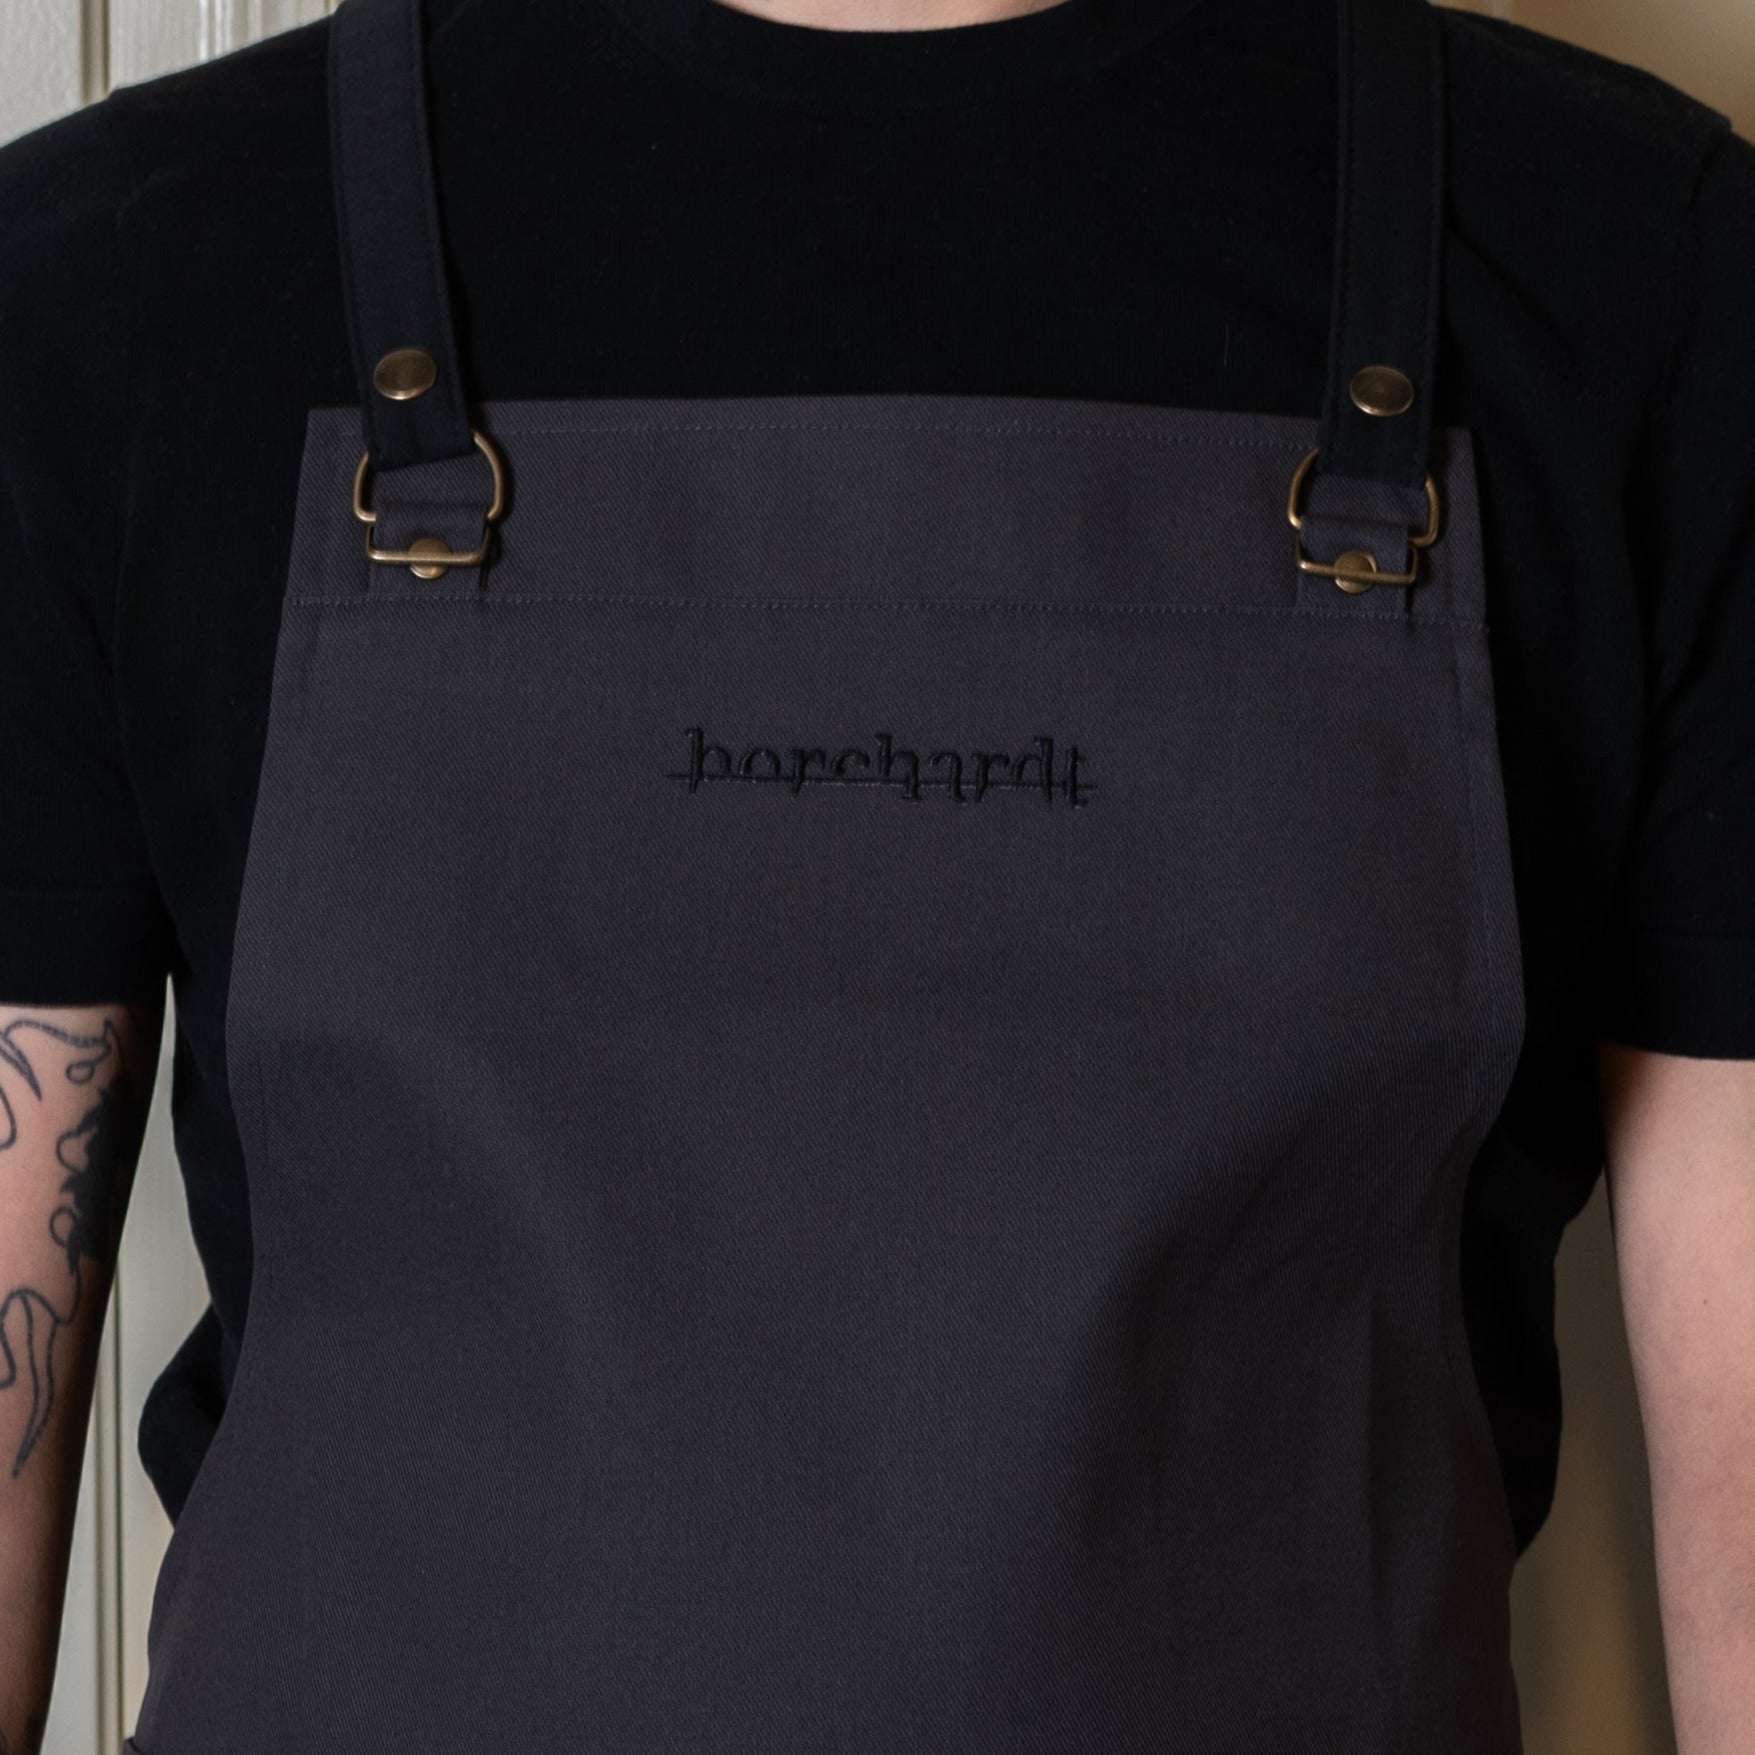 Design apron with borchardt logo 